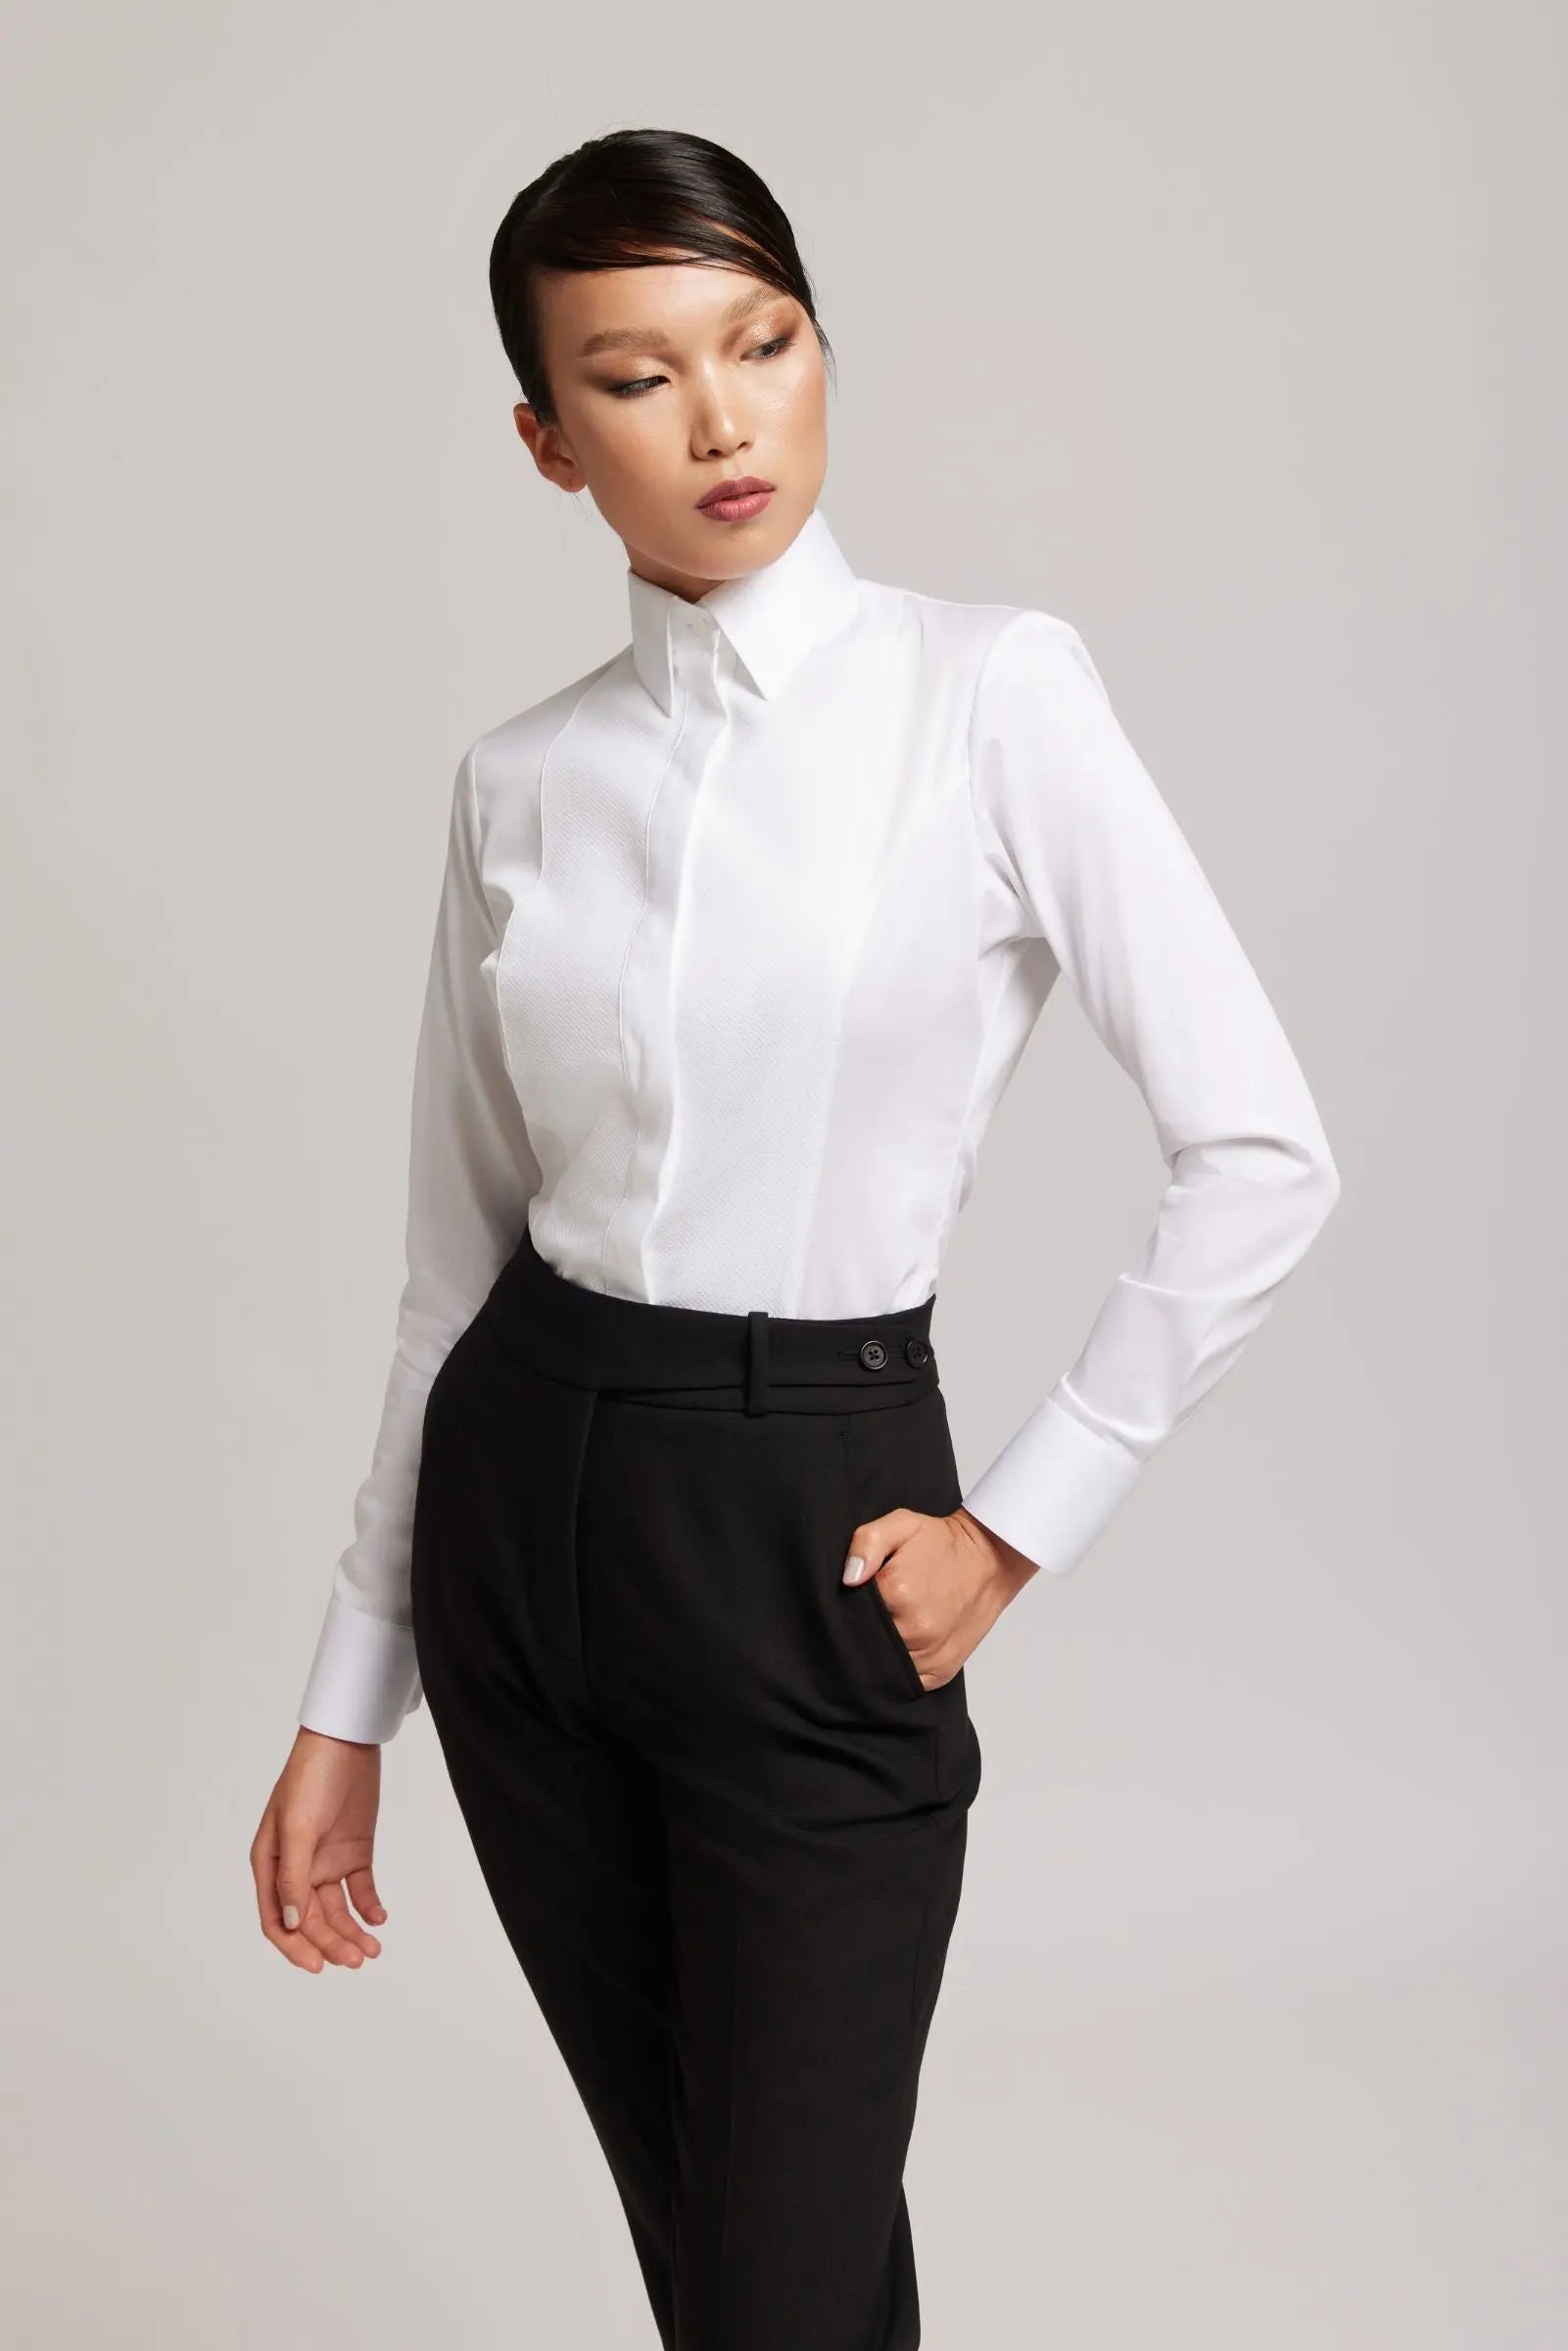 Textured Majesty White Shirt Alexandra Dobre